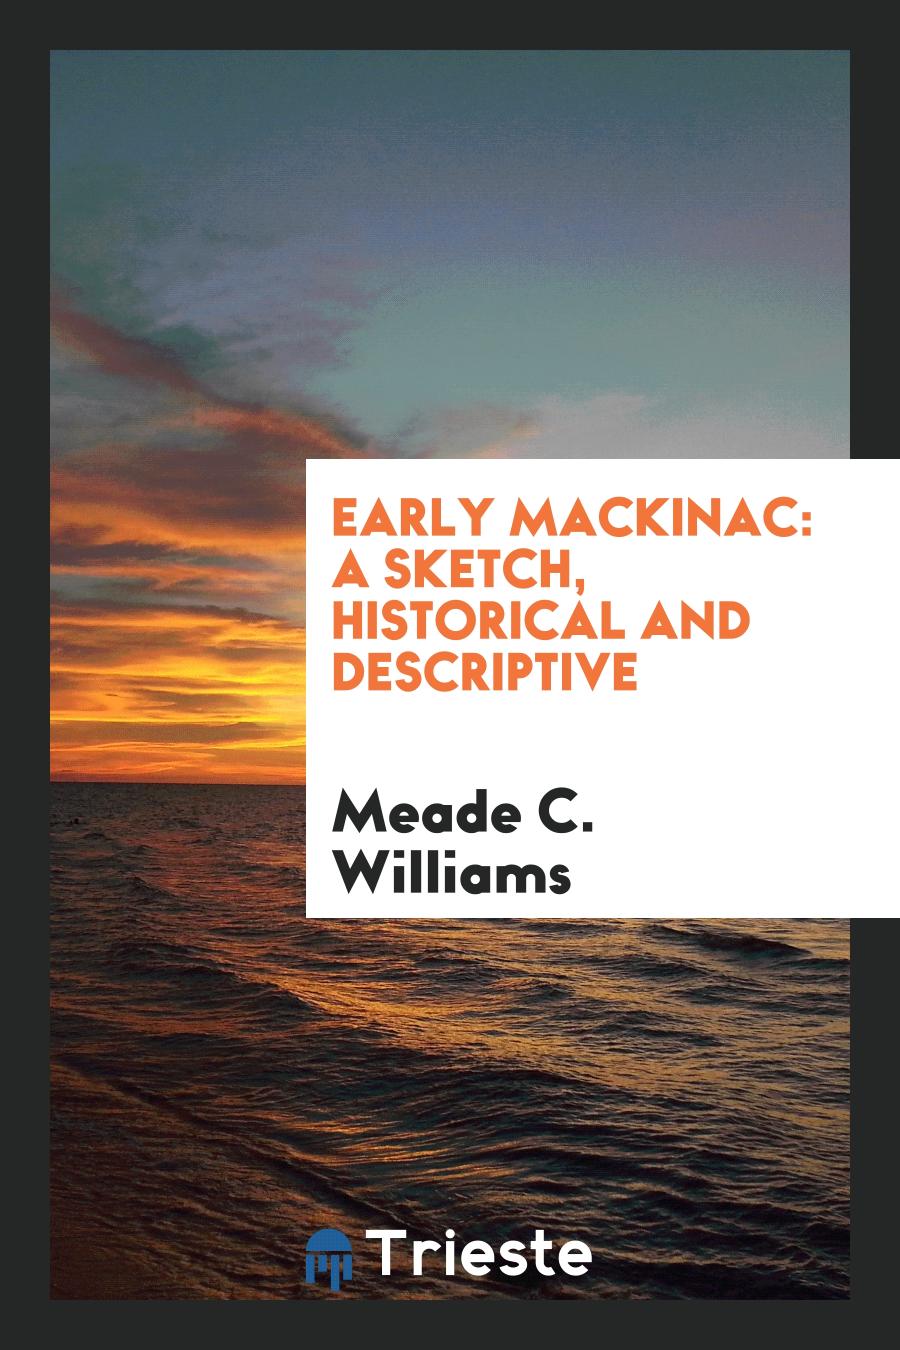 Early Mackinac: A Sketch, Historical and Descriptive